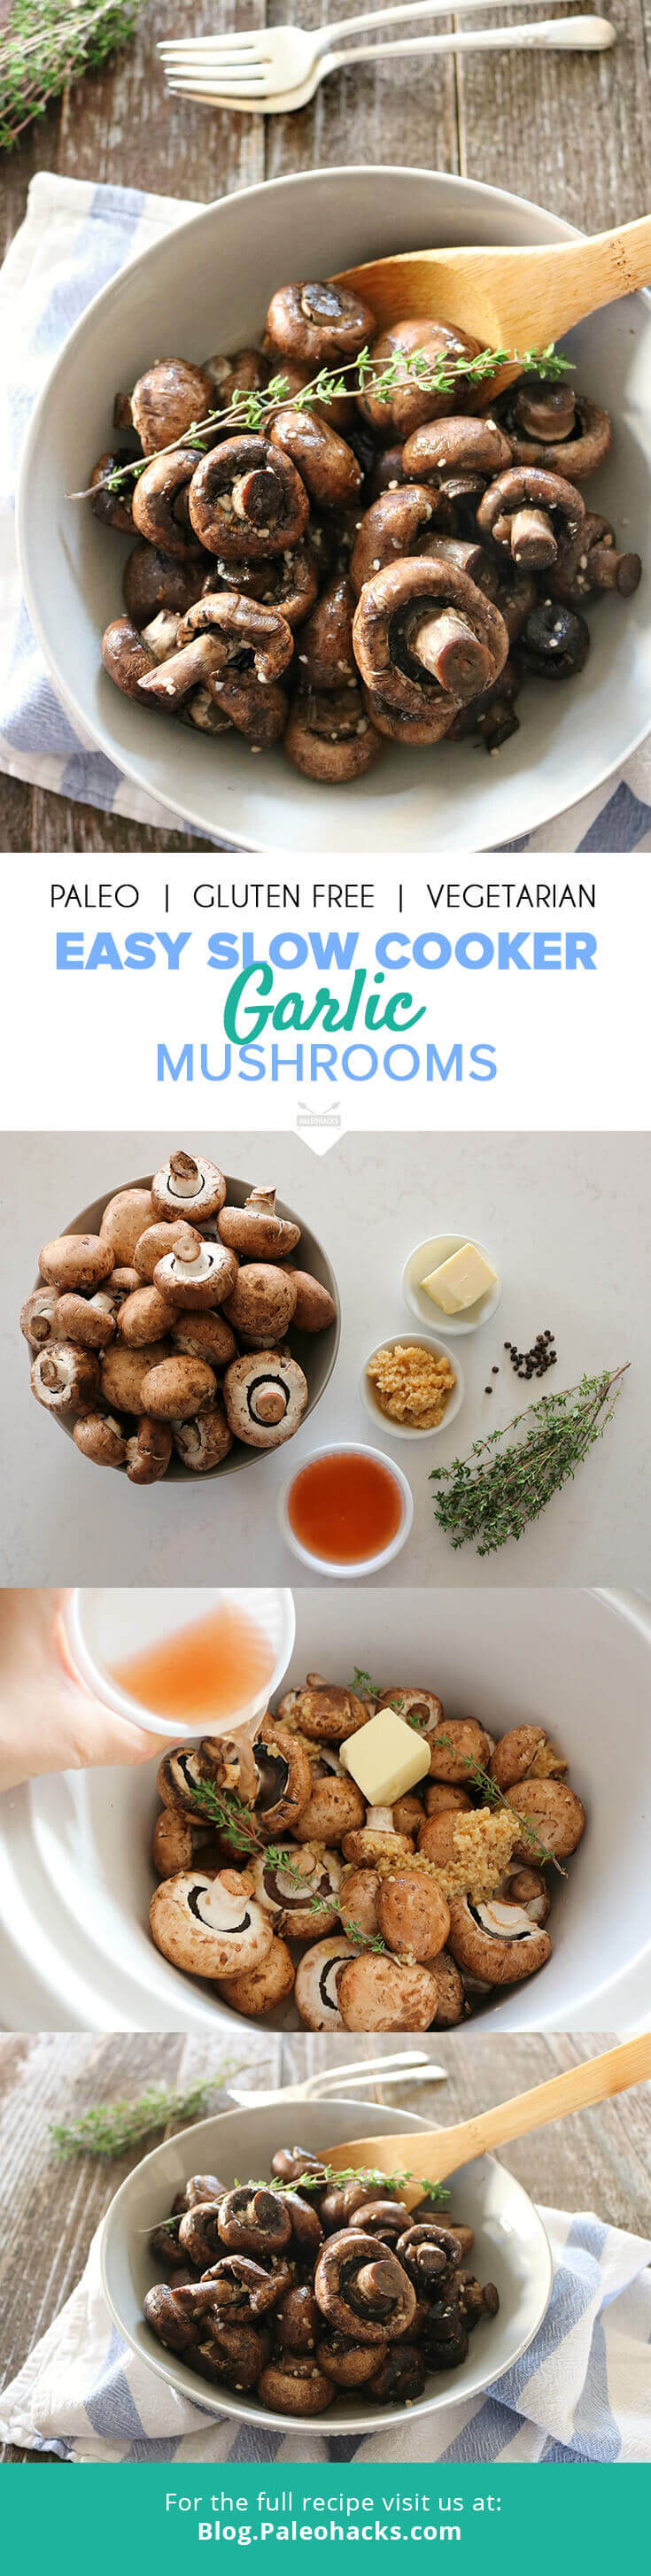 garlic mushrooms pin